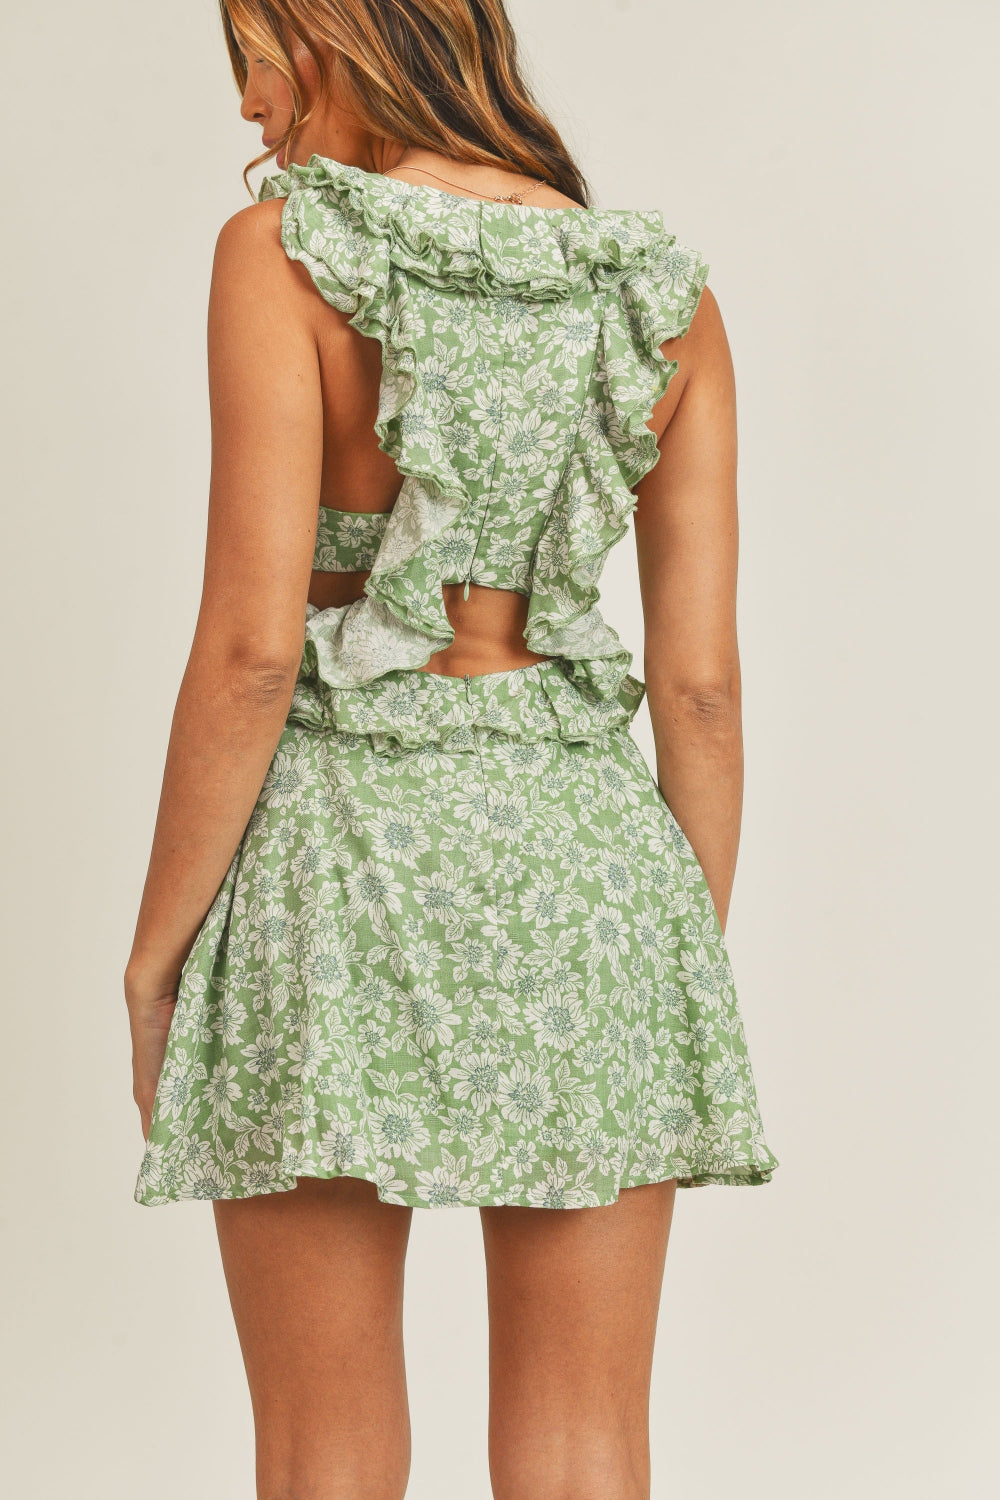 Sage Floral Side Cutout Ruffled Mini Dress